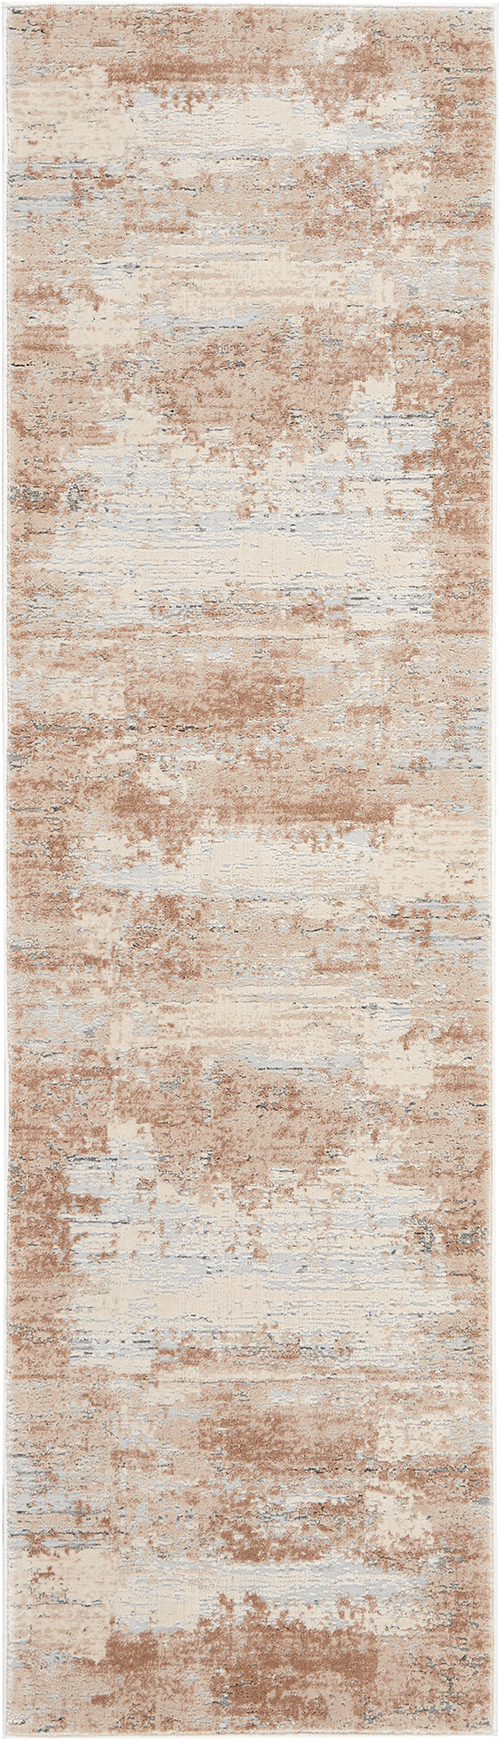 Nourison Rugs - Rustic Textures Runner RUS03 Rug in Beige - 2.3m x 0.66m